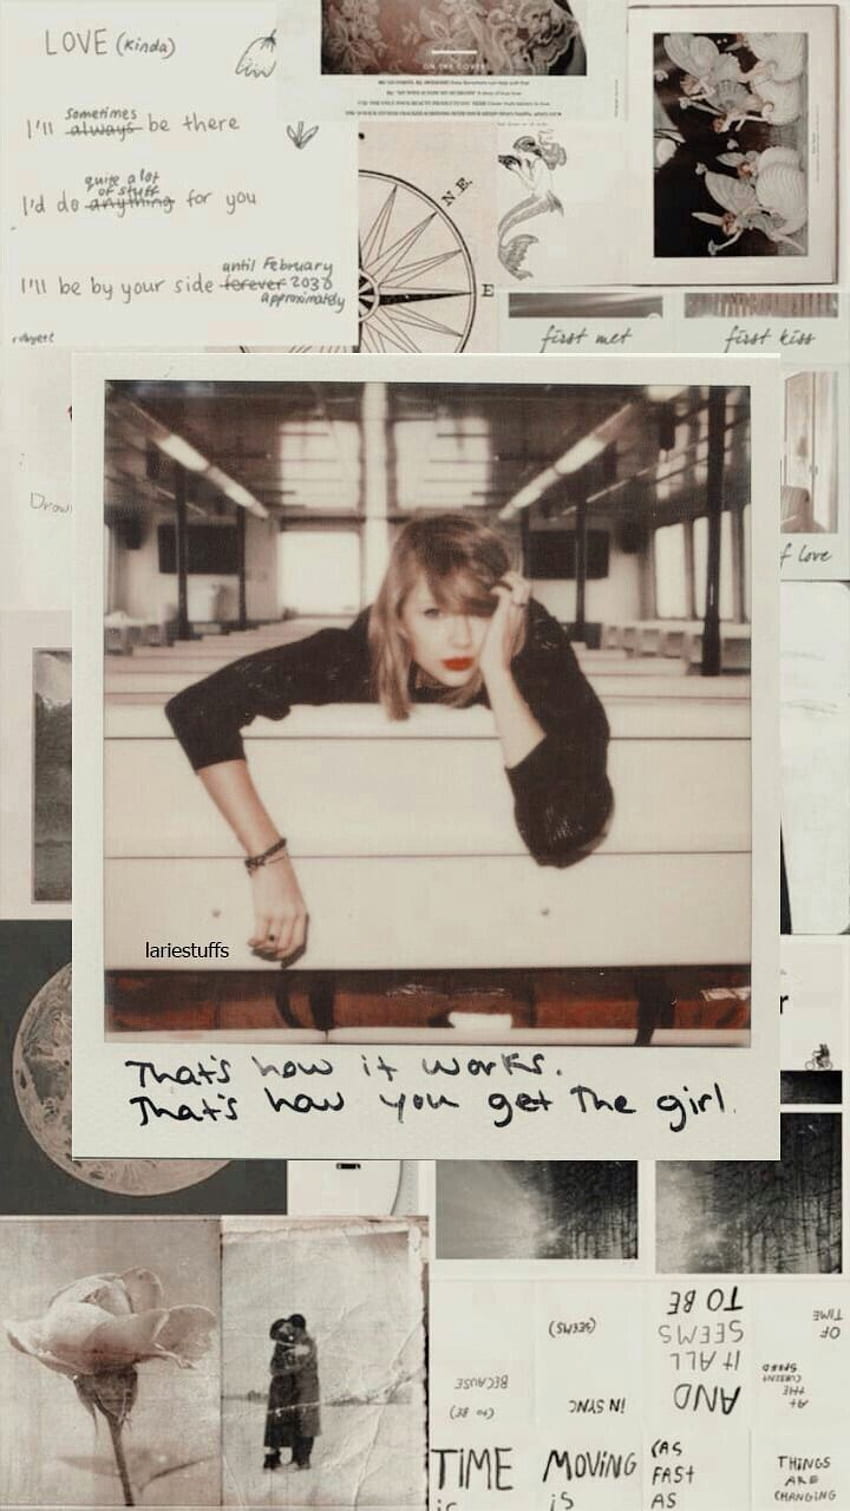 Taylor Swift 1989 World Tour Desktop Wallpaper by fbli41 on DeviantArt